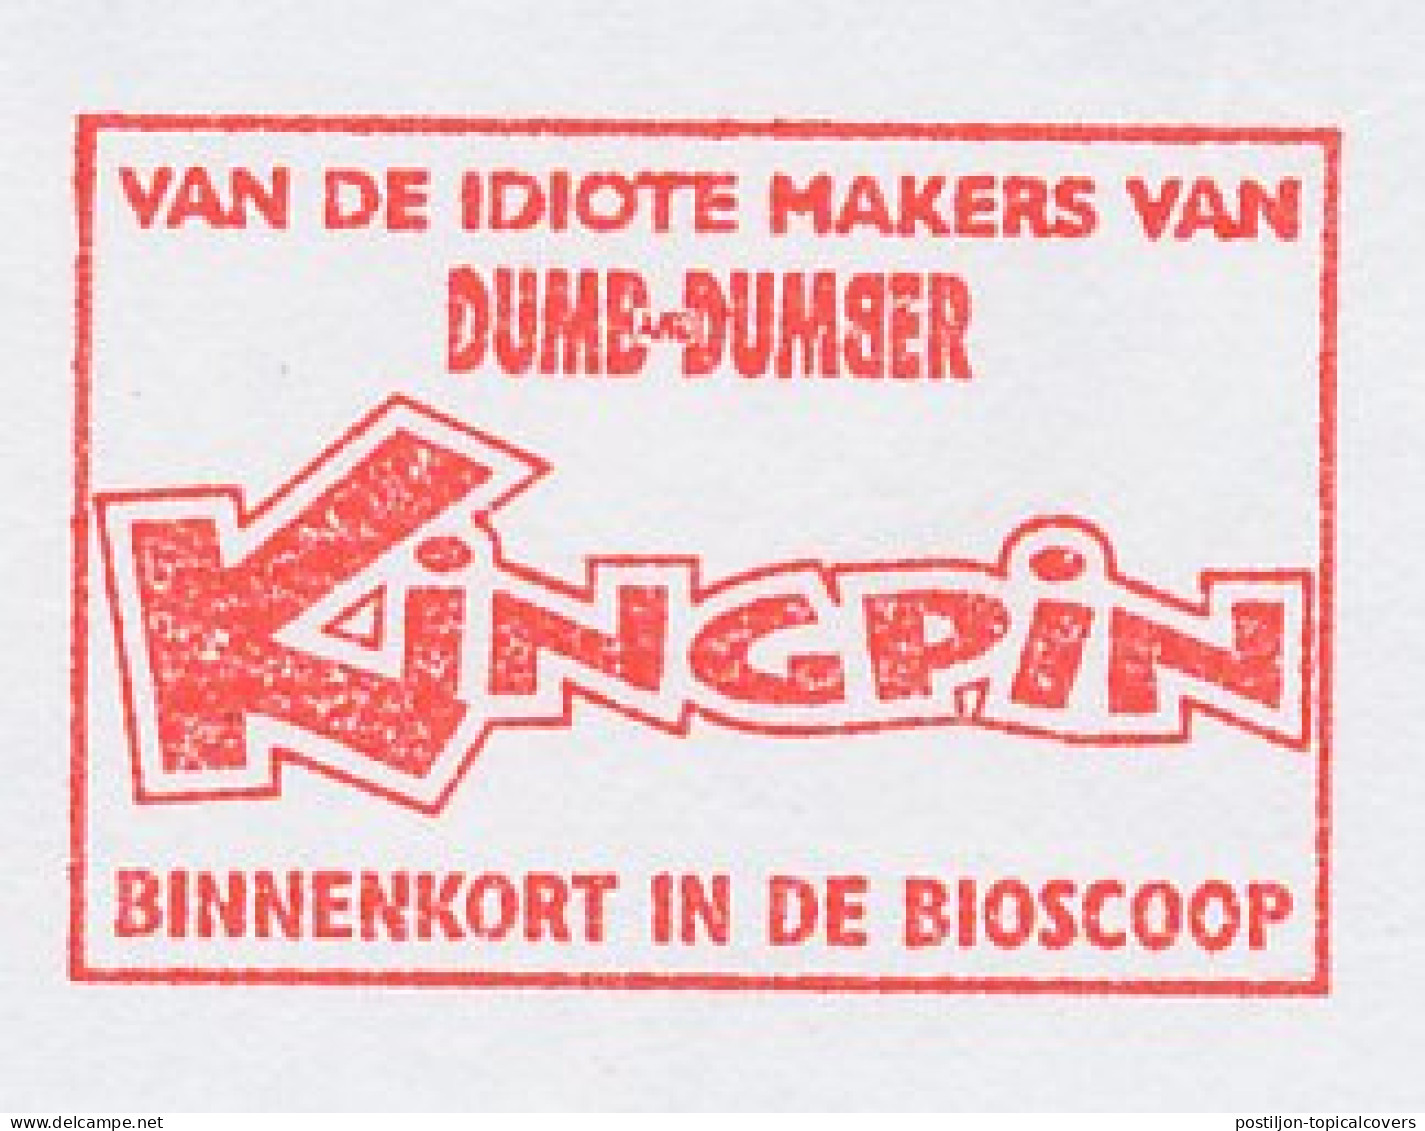 Meter Top Cut Netherlands 1996 Kingpin - Movie - Kino